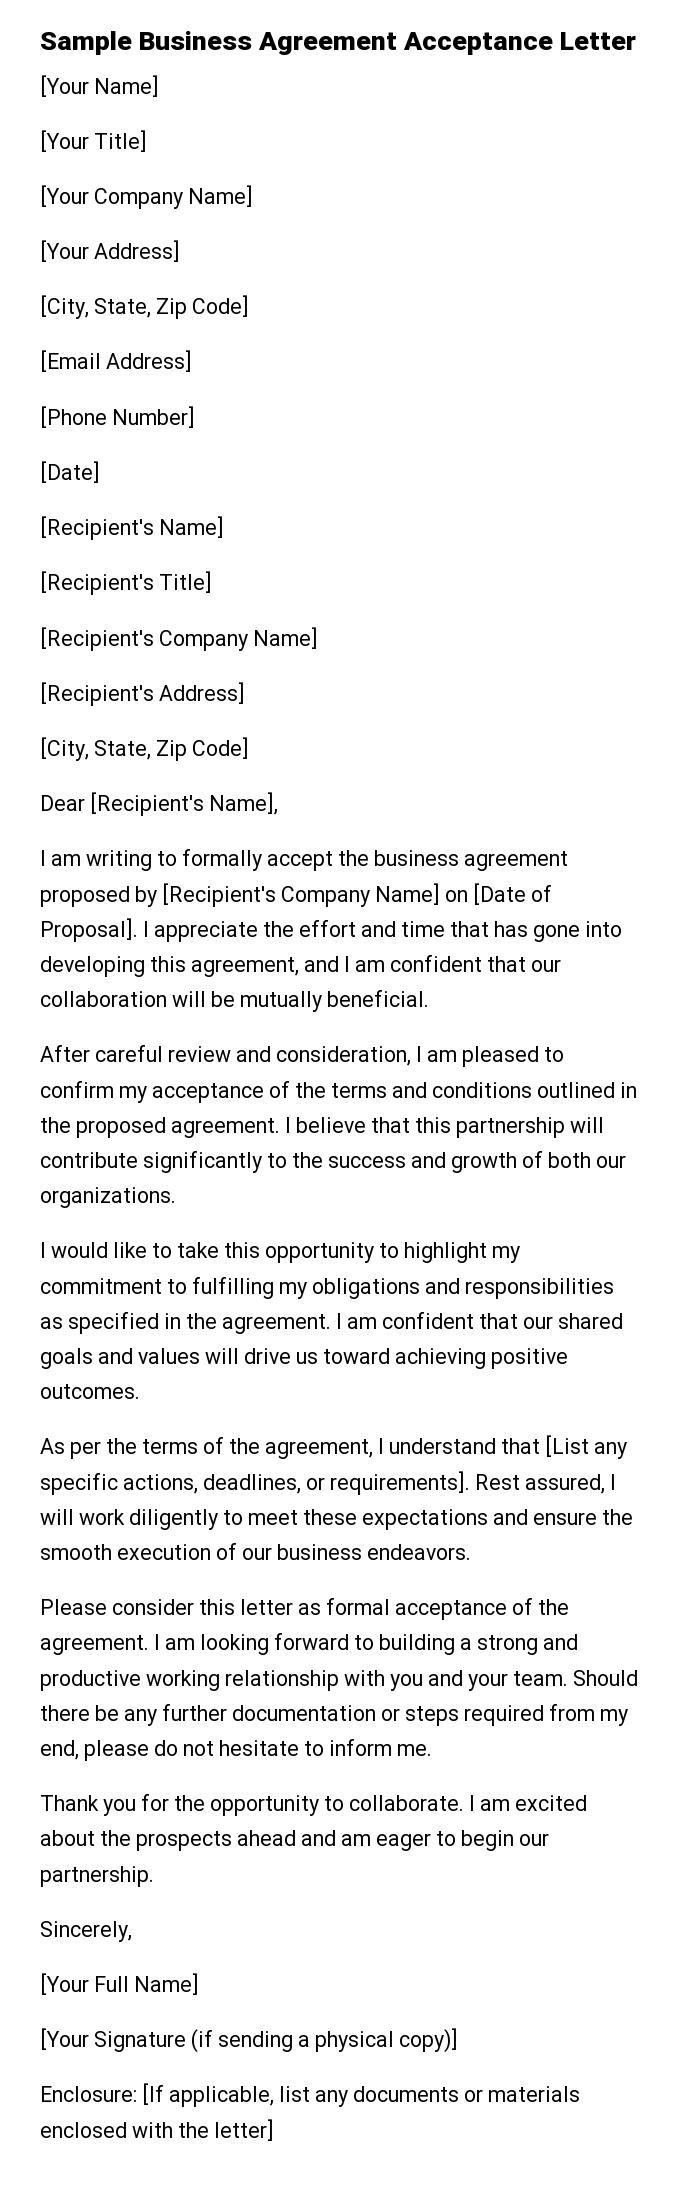 Sample Business Agreement Acceptance Letter